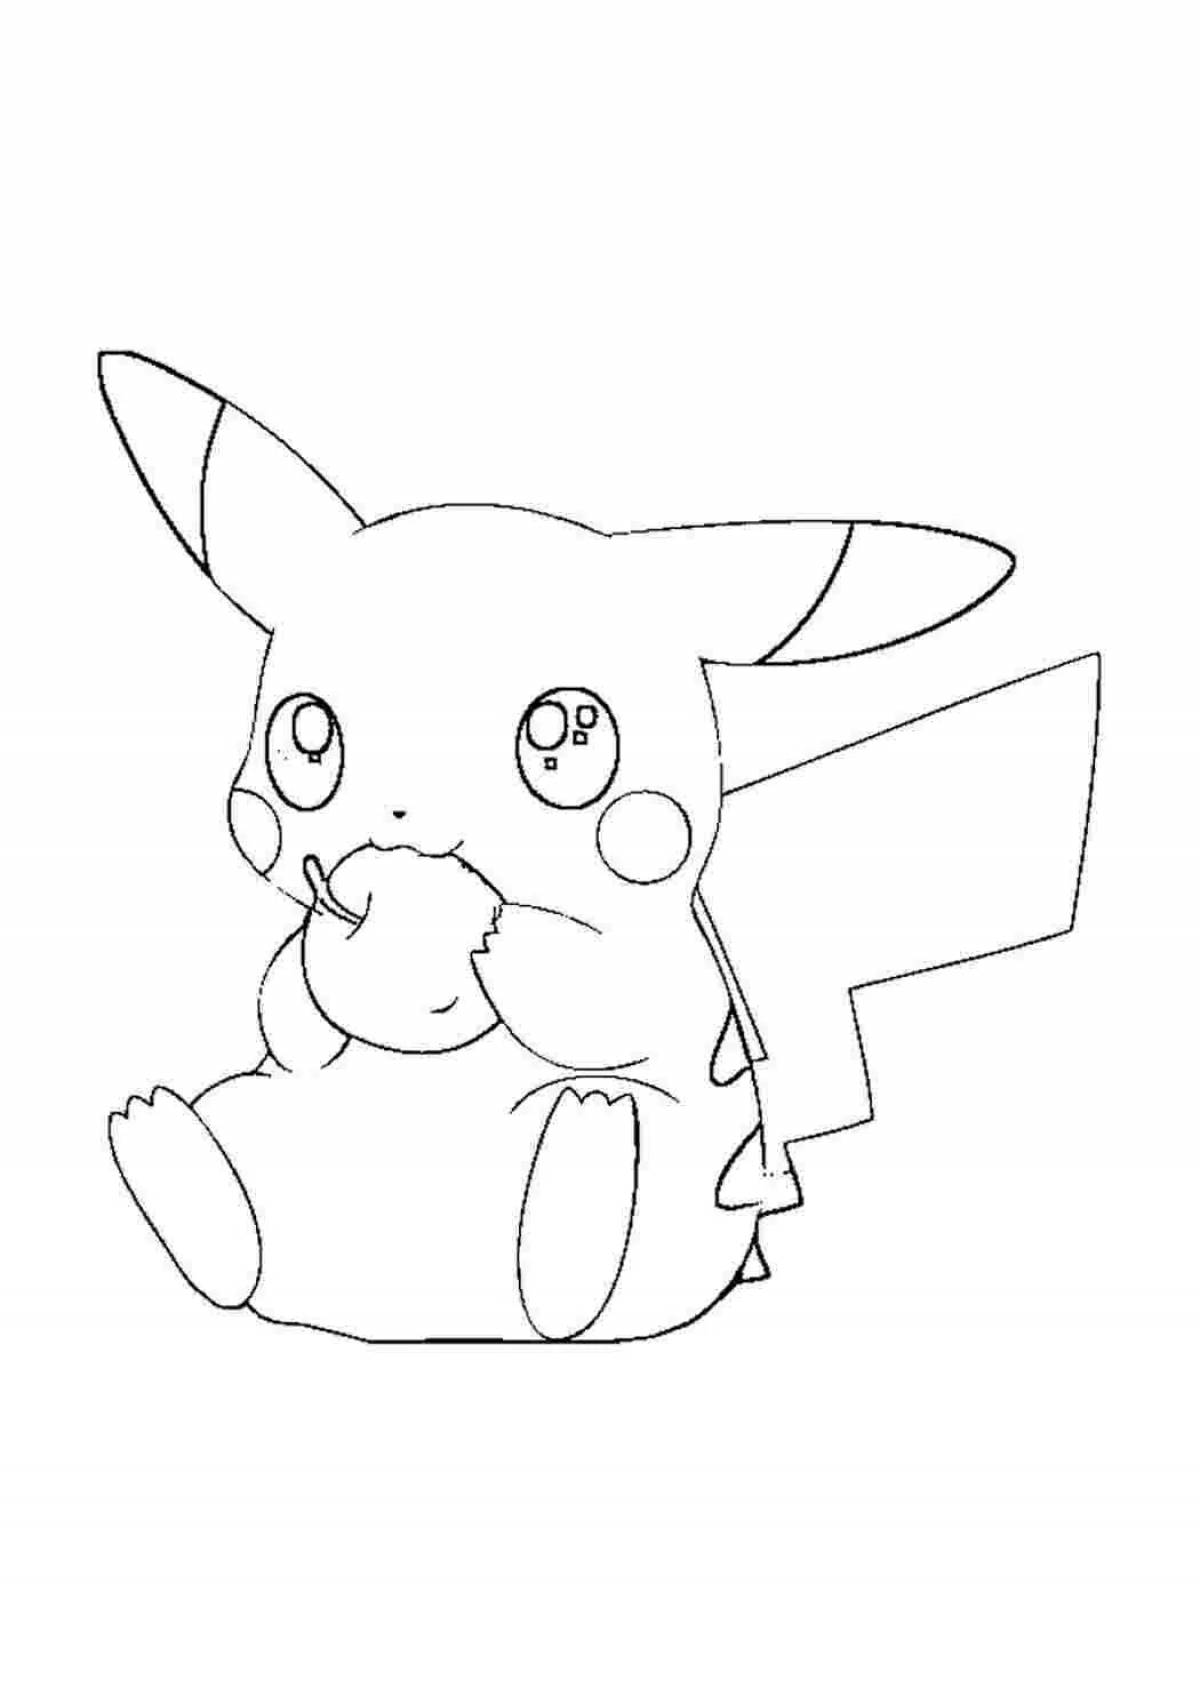 Stimulating pikachu coloring book